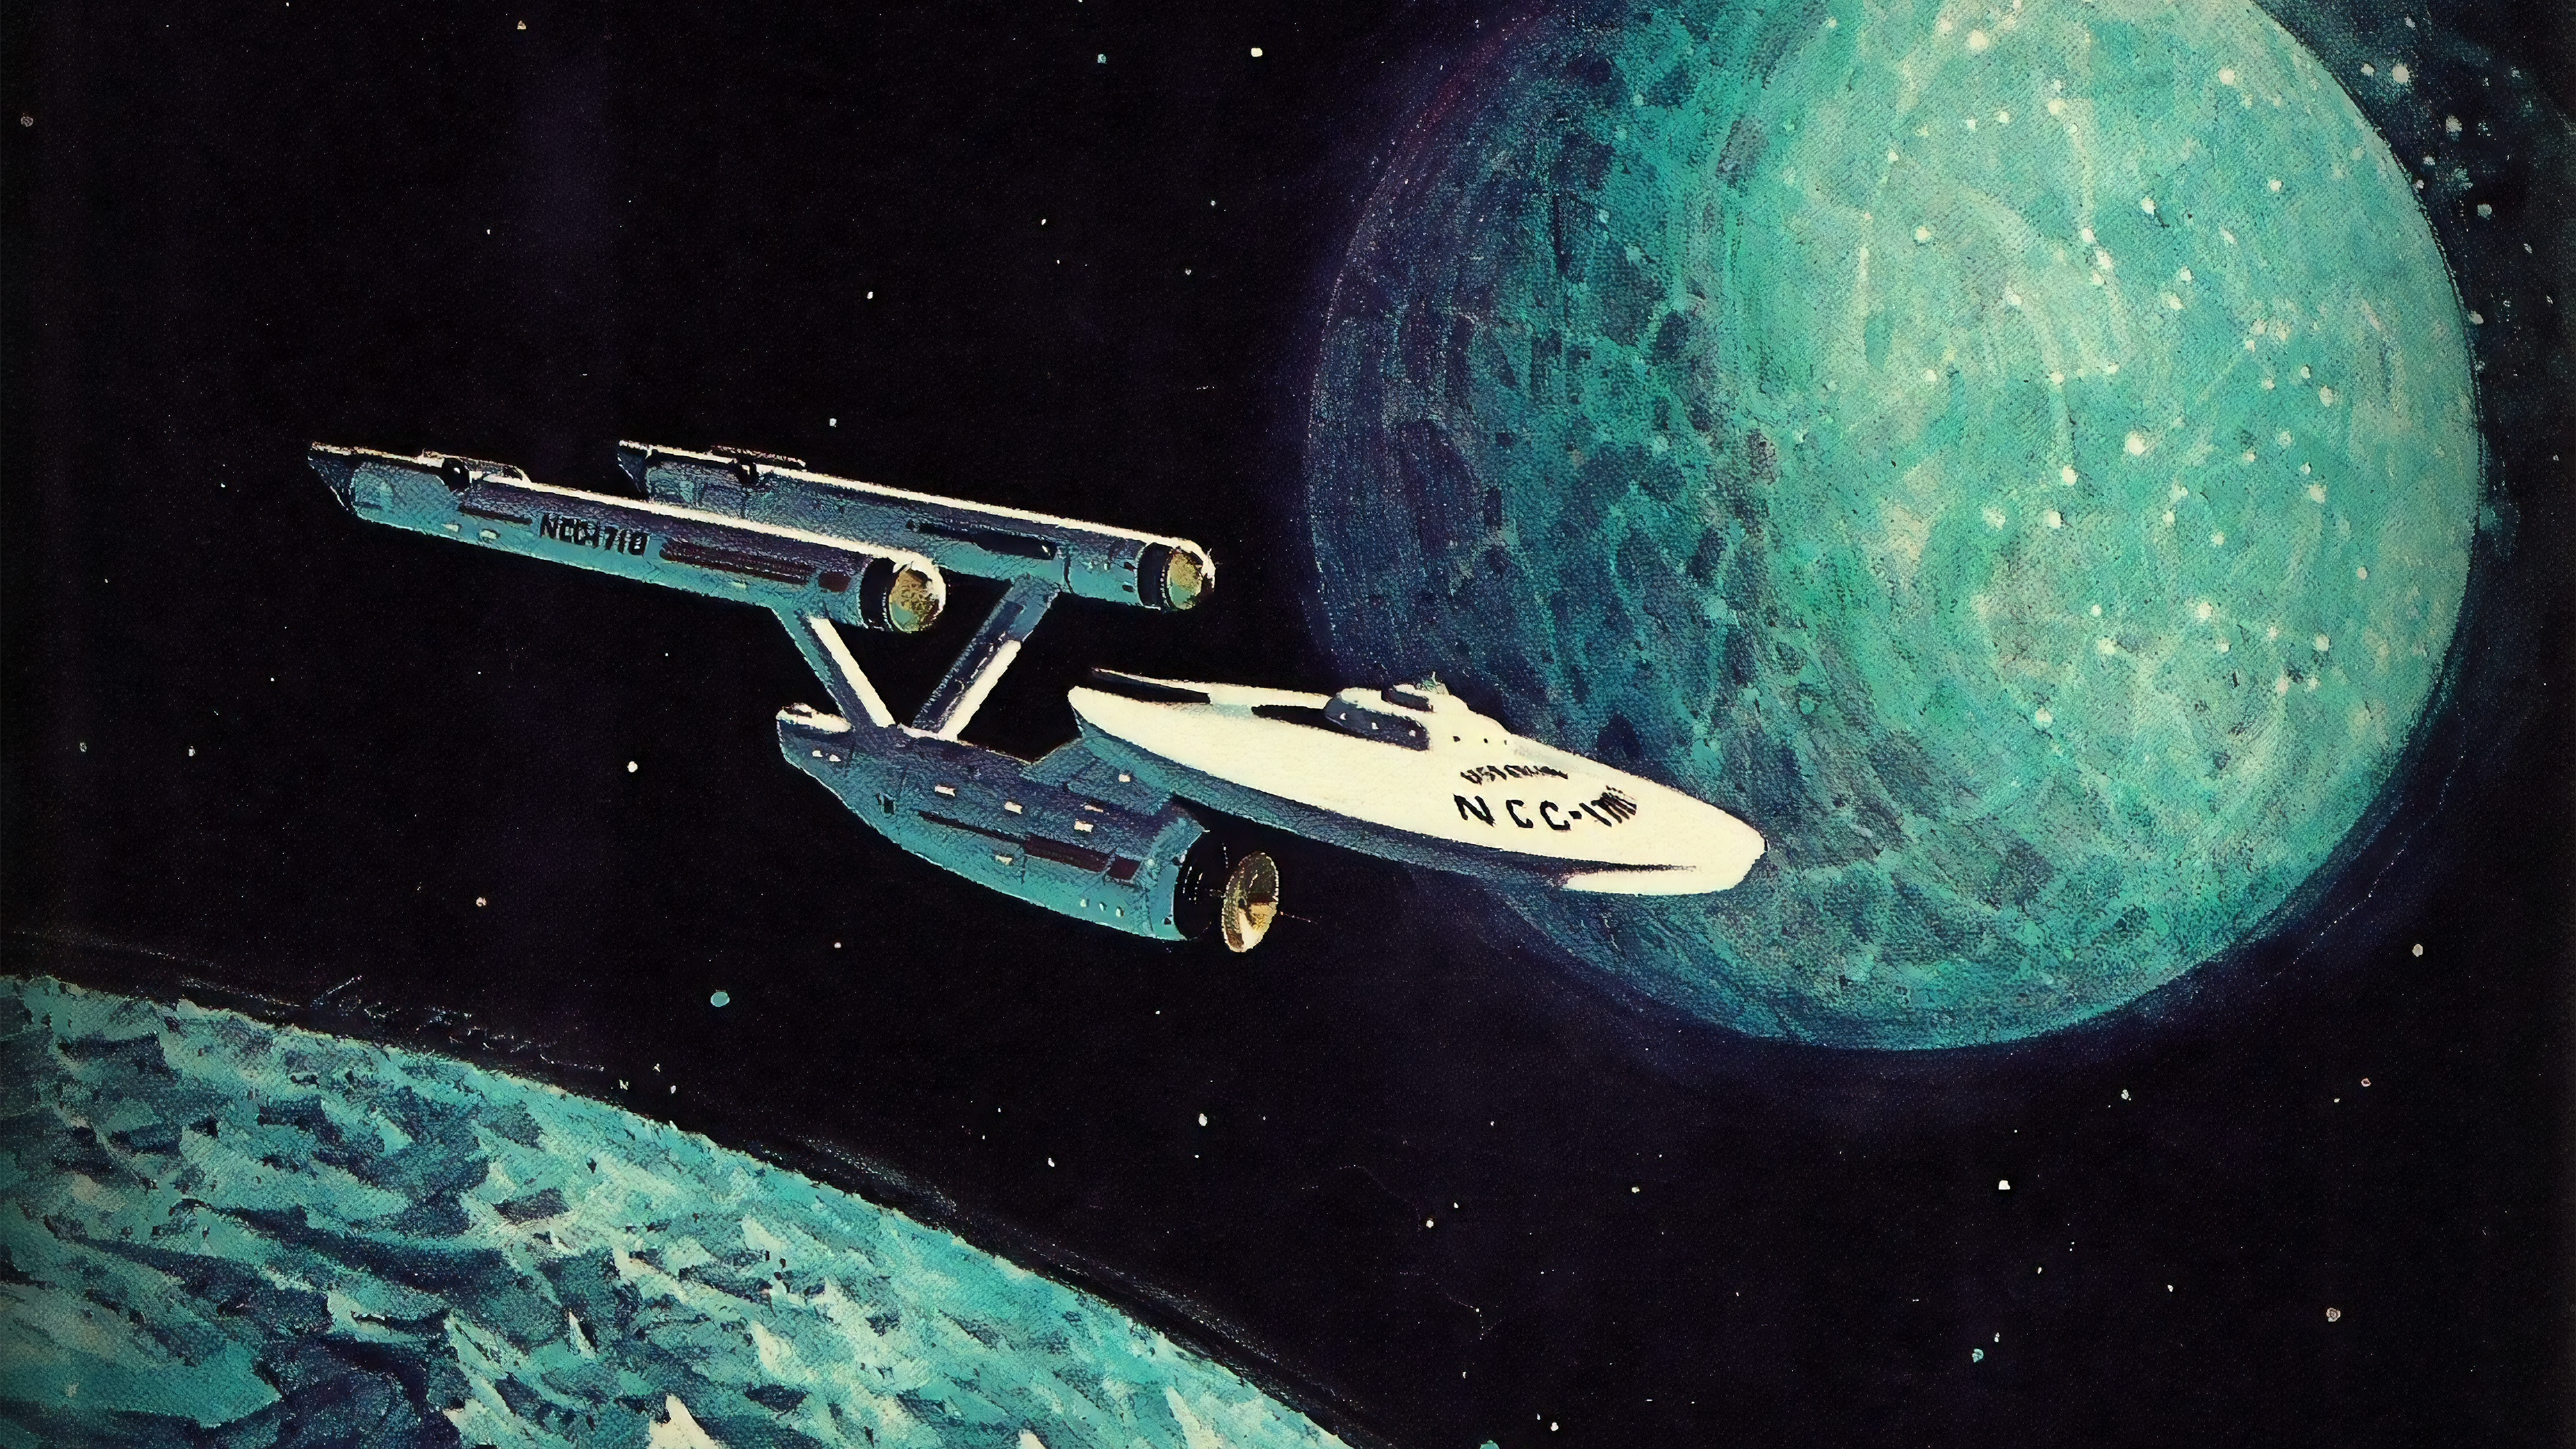 Star Trek 4 Cover by Lou Feck (1971) [3840x2160]